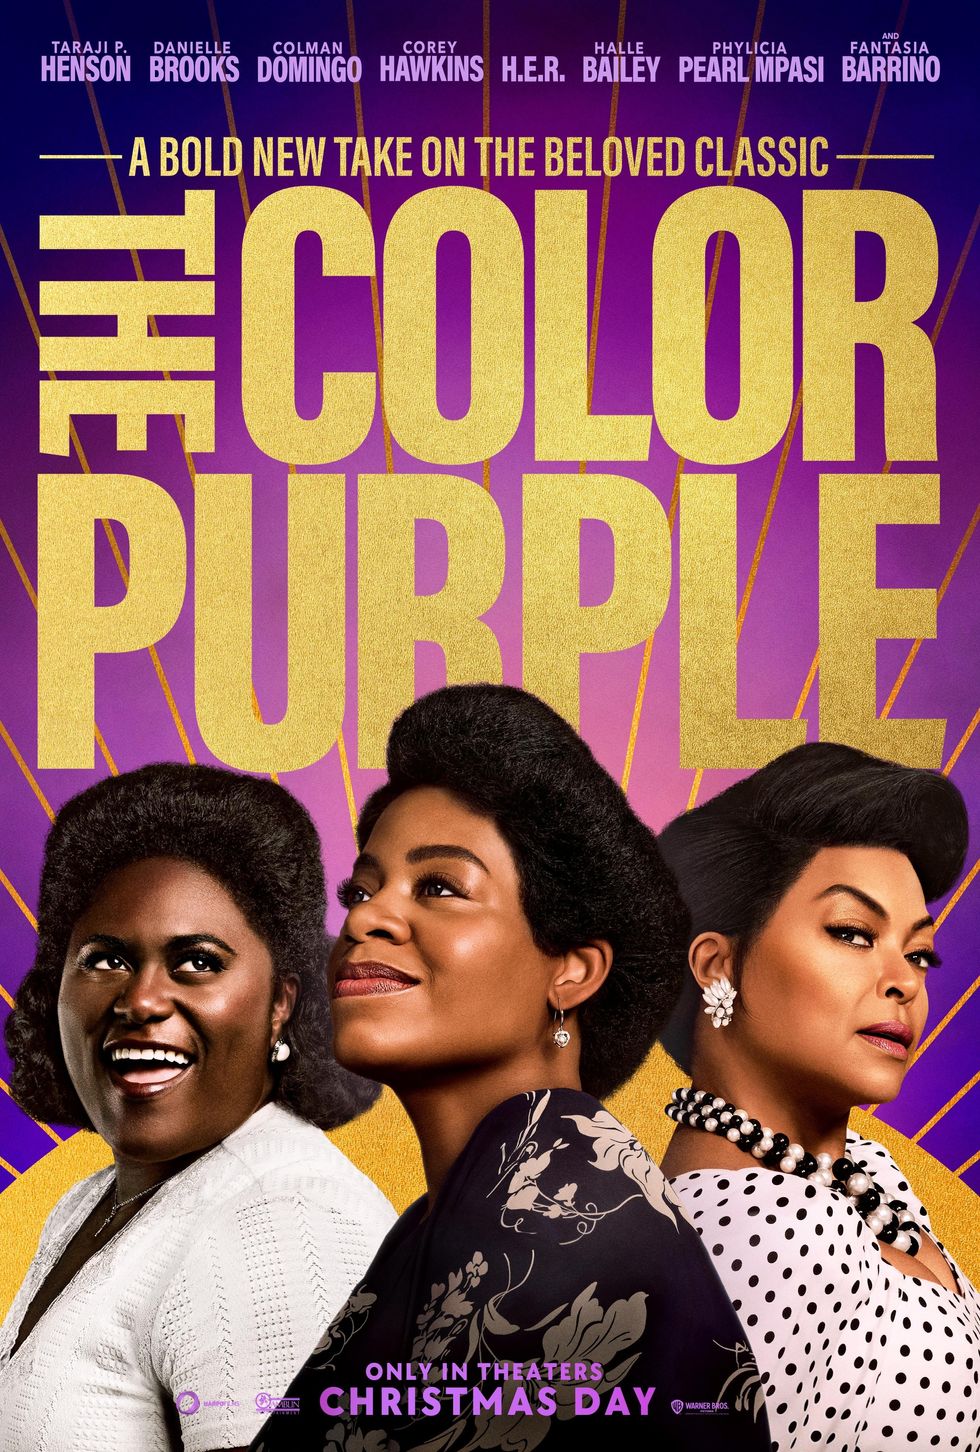 The Color Purple Halle Bailey, and starring Bailey, Taraji P. Henson, and H.E.R. Fantasia Barrino